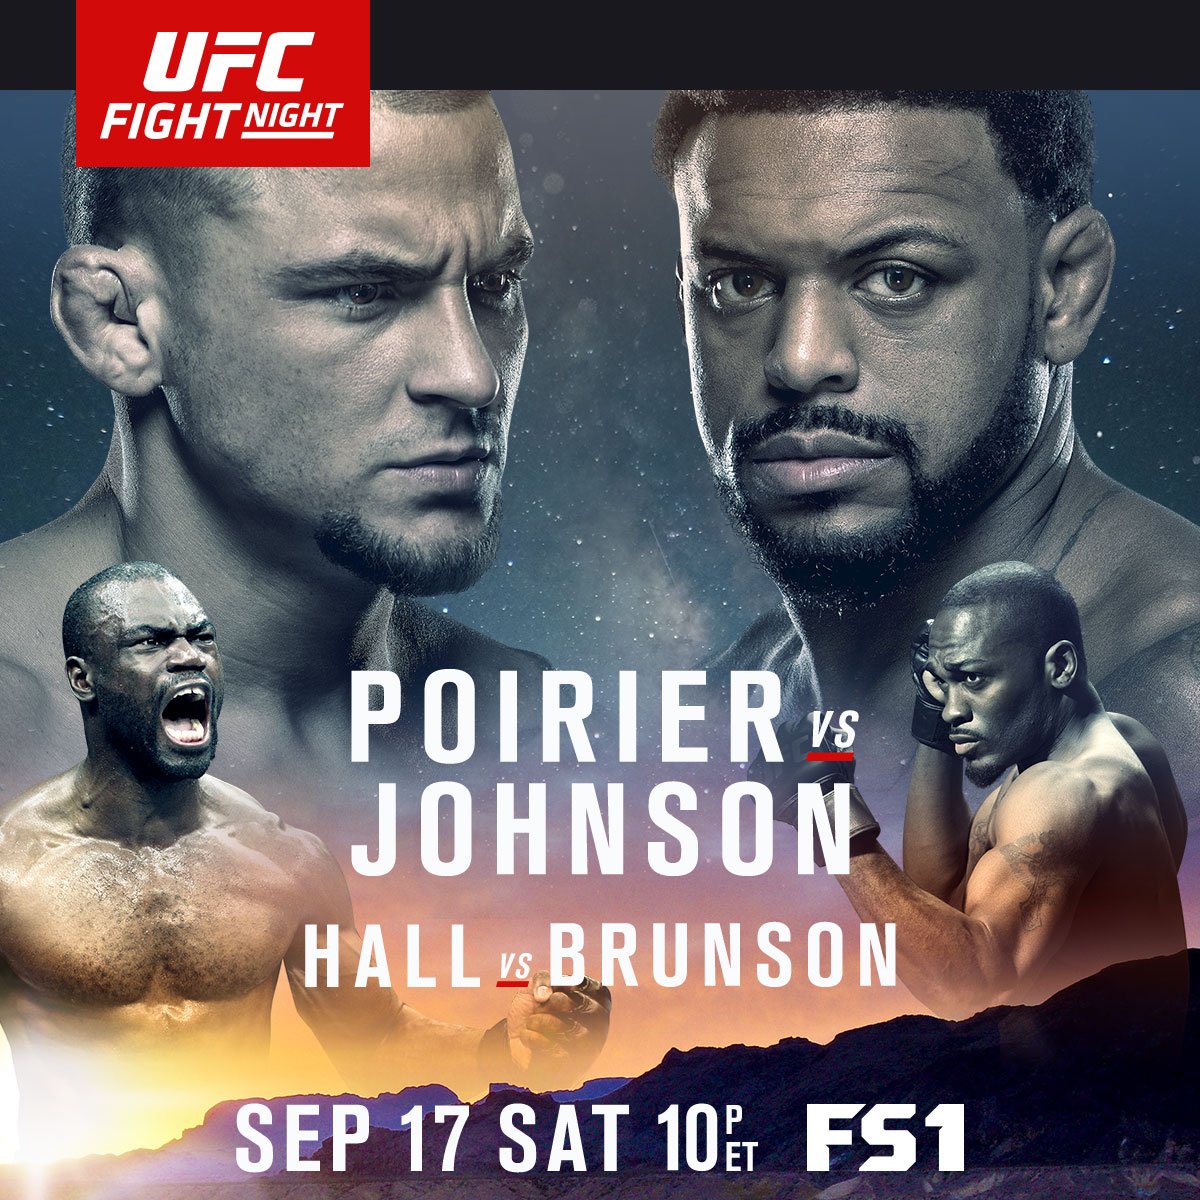 [UFC] Fight Night 94: Poirier vs. Johnson Co-BbFIUkAA0e1z